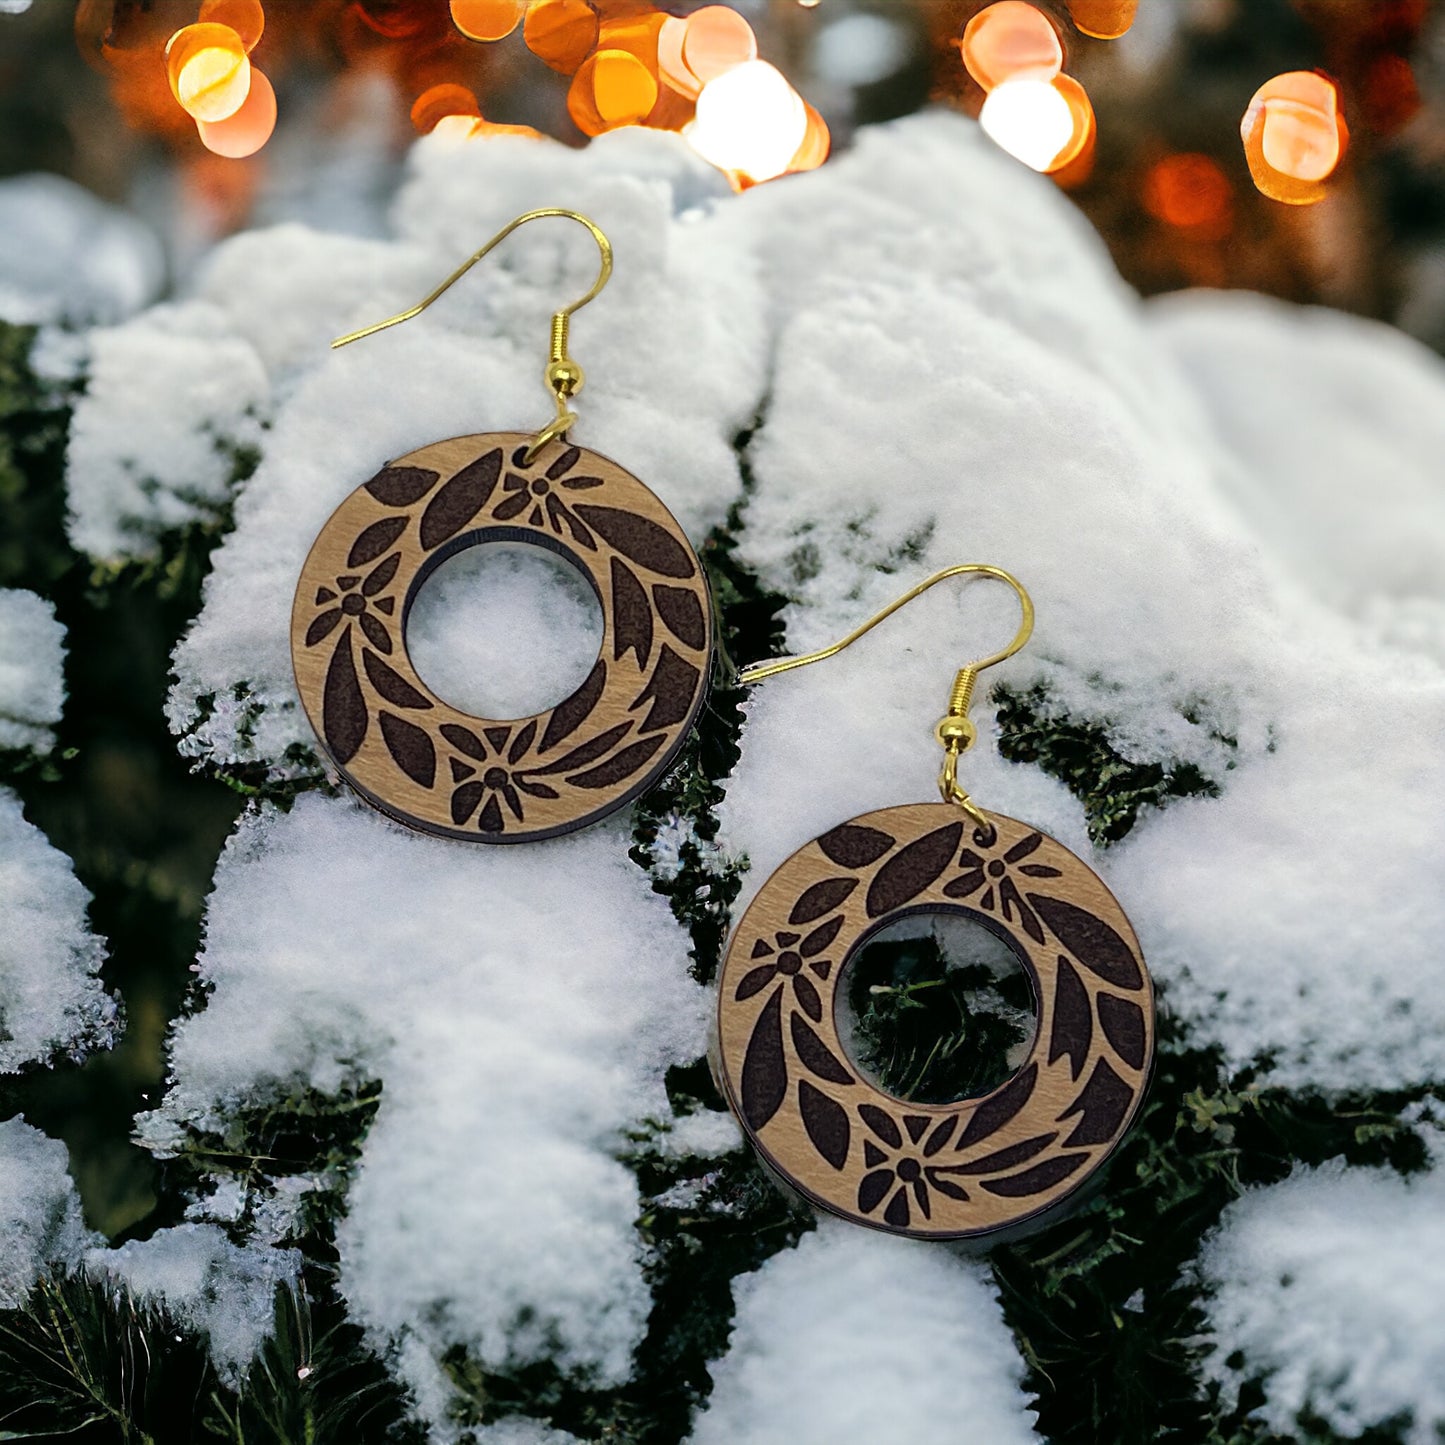 Holly Earrings, Christmas Mistletoe Dangle Earrings, Cute Holiday Earrings, Wood Plant Earring, Country Xmas Jewelry, Rustic Nature Gift Set